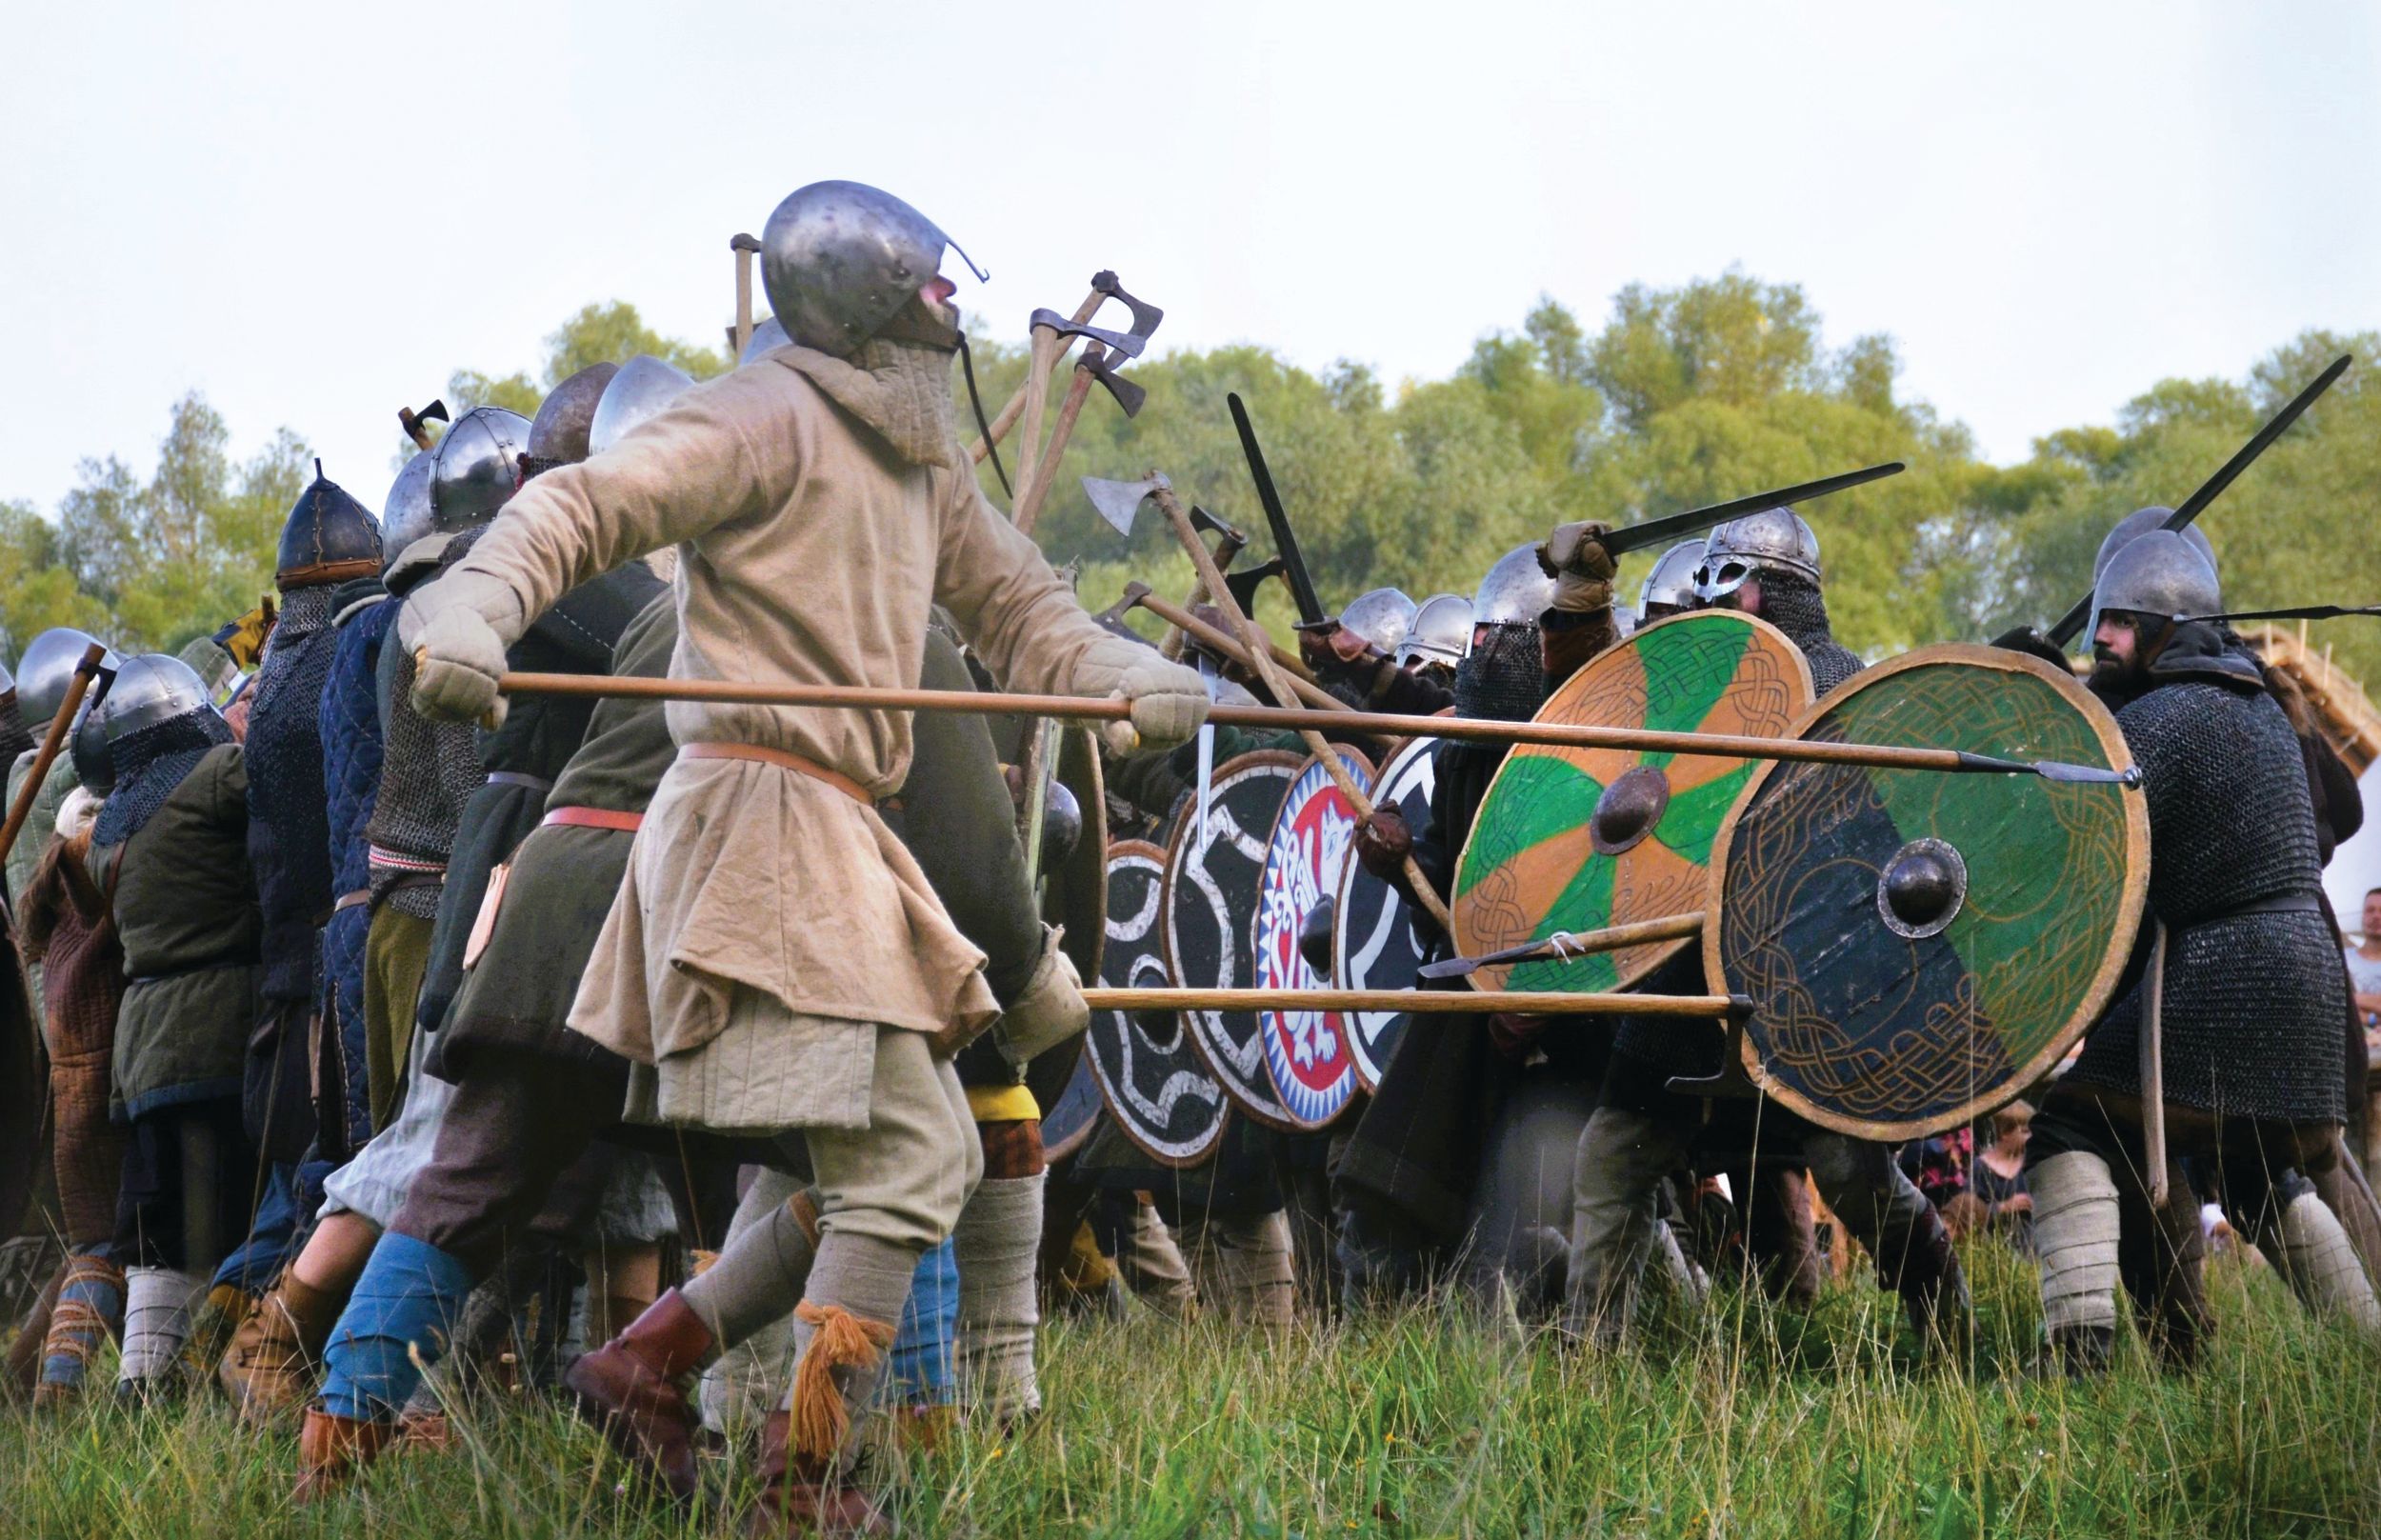 Modern European reenactors portraying Saxons and Vikings, demonstrate shield-wall combat using axes, swords, and pikes.